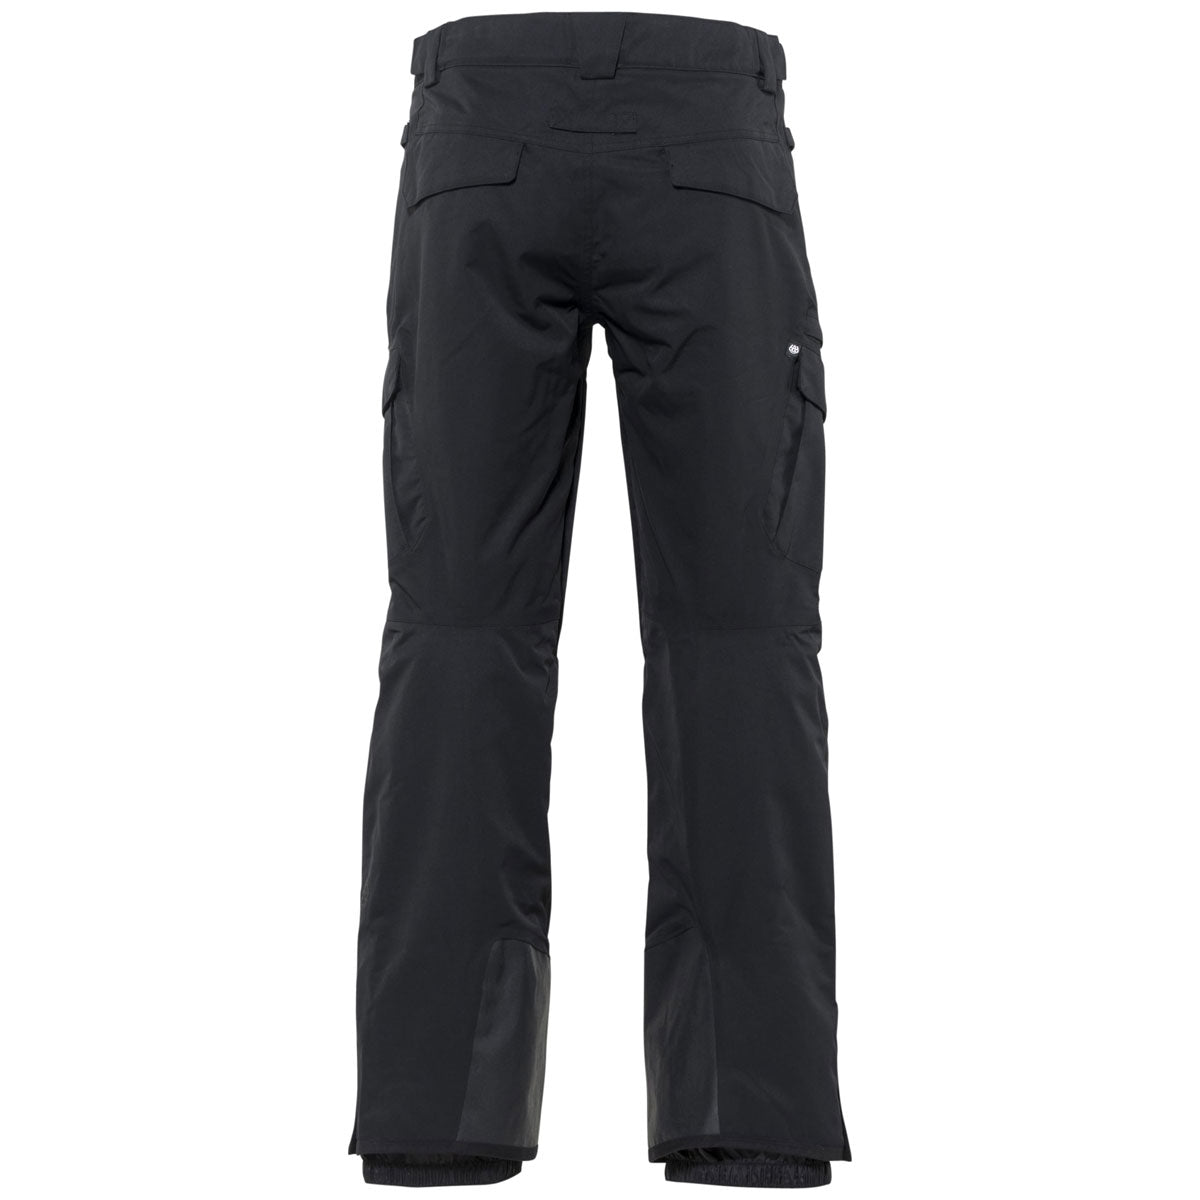 686 Men's SMARTY 3-in-1 Cargo Snowboard Pants - Black image 2